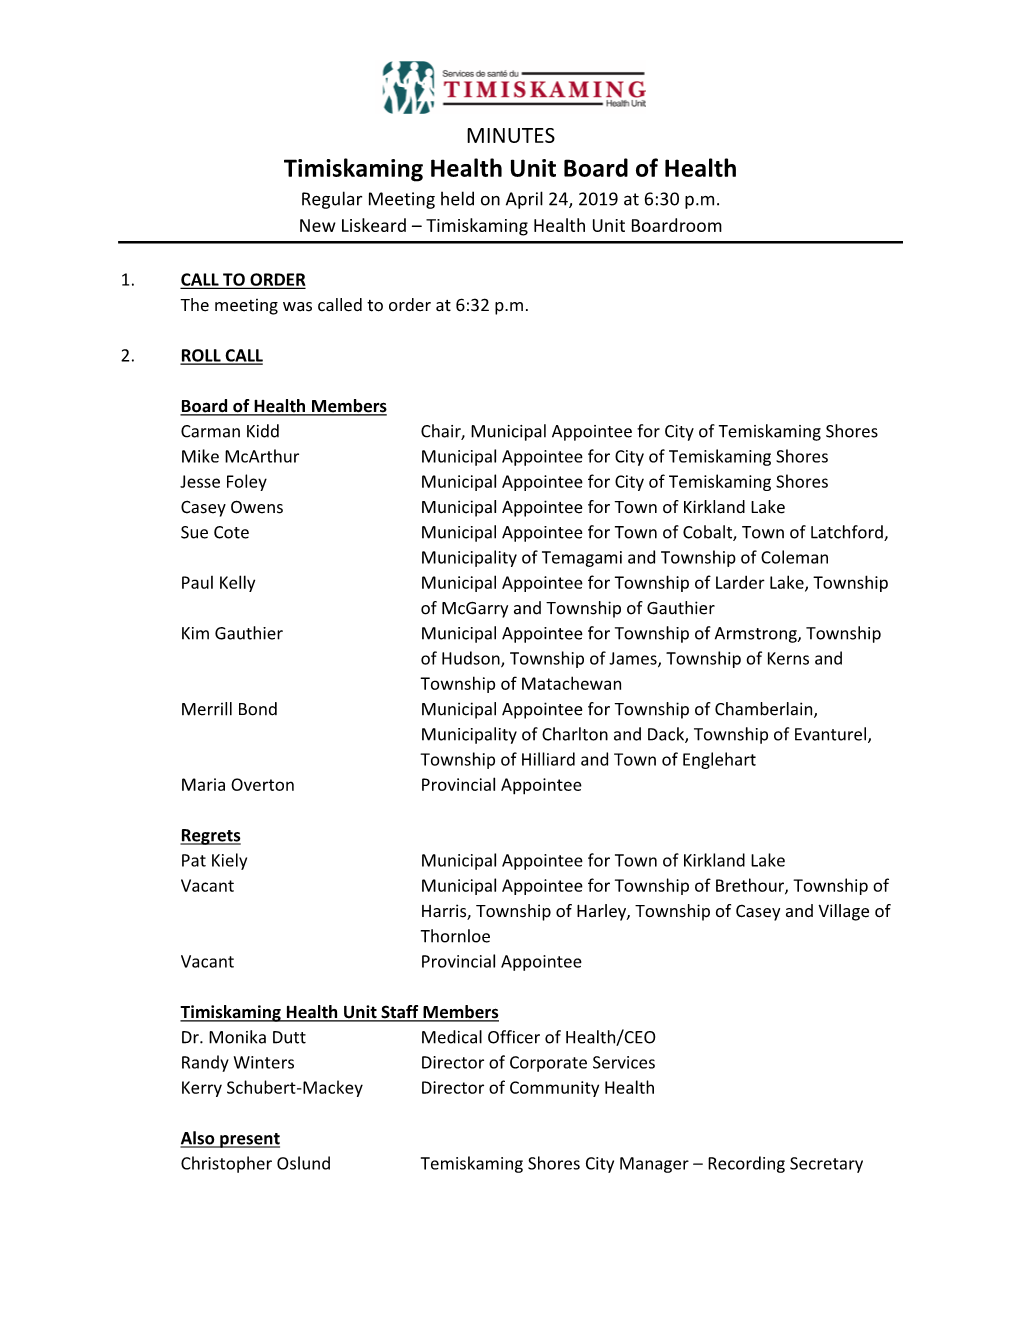 Timiskaming Health Unit Board of Health Regular Meeting Held on April 24, 2019 at 6:30 P.M